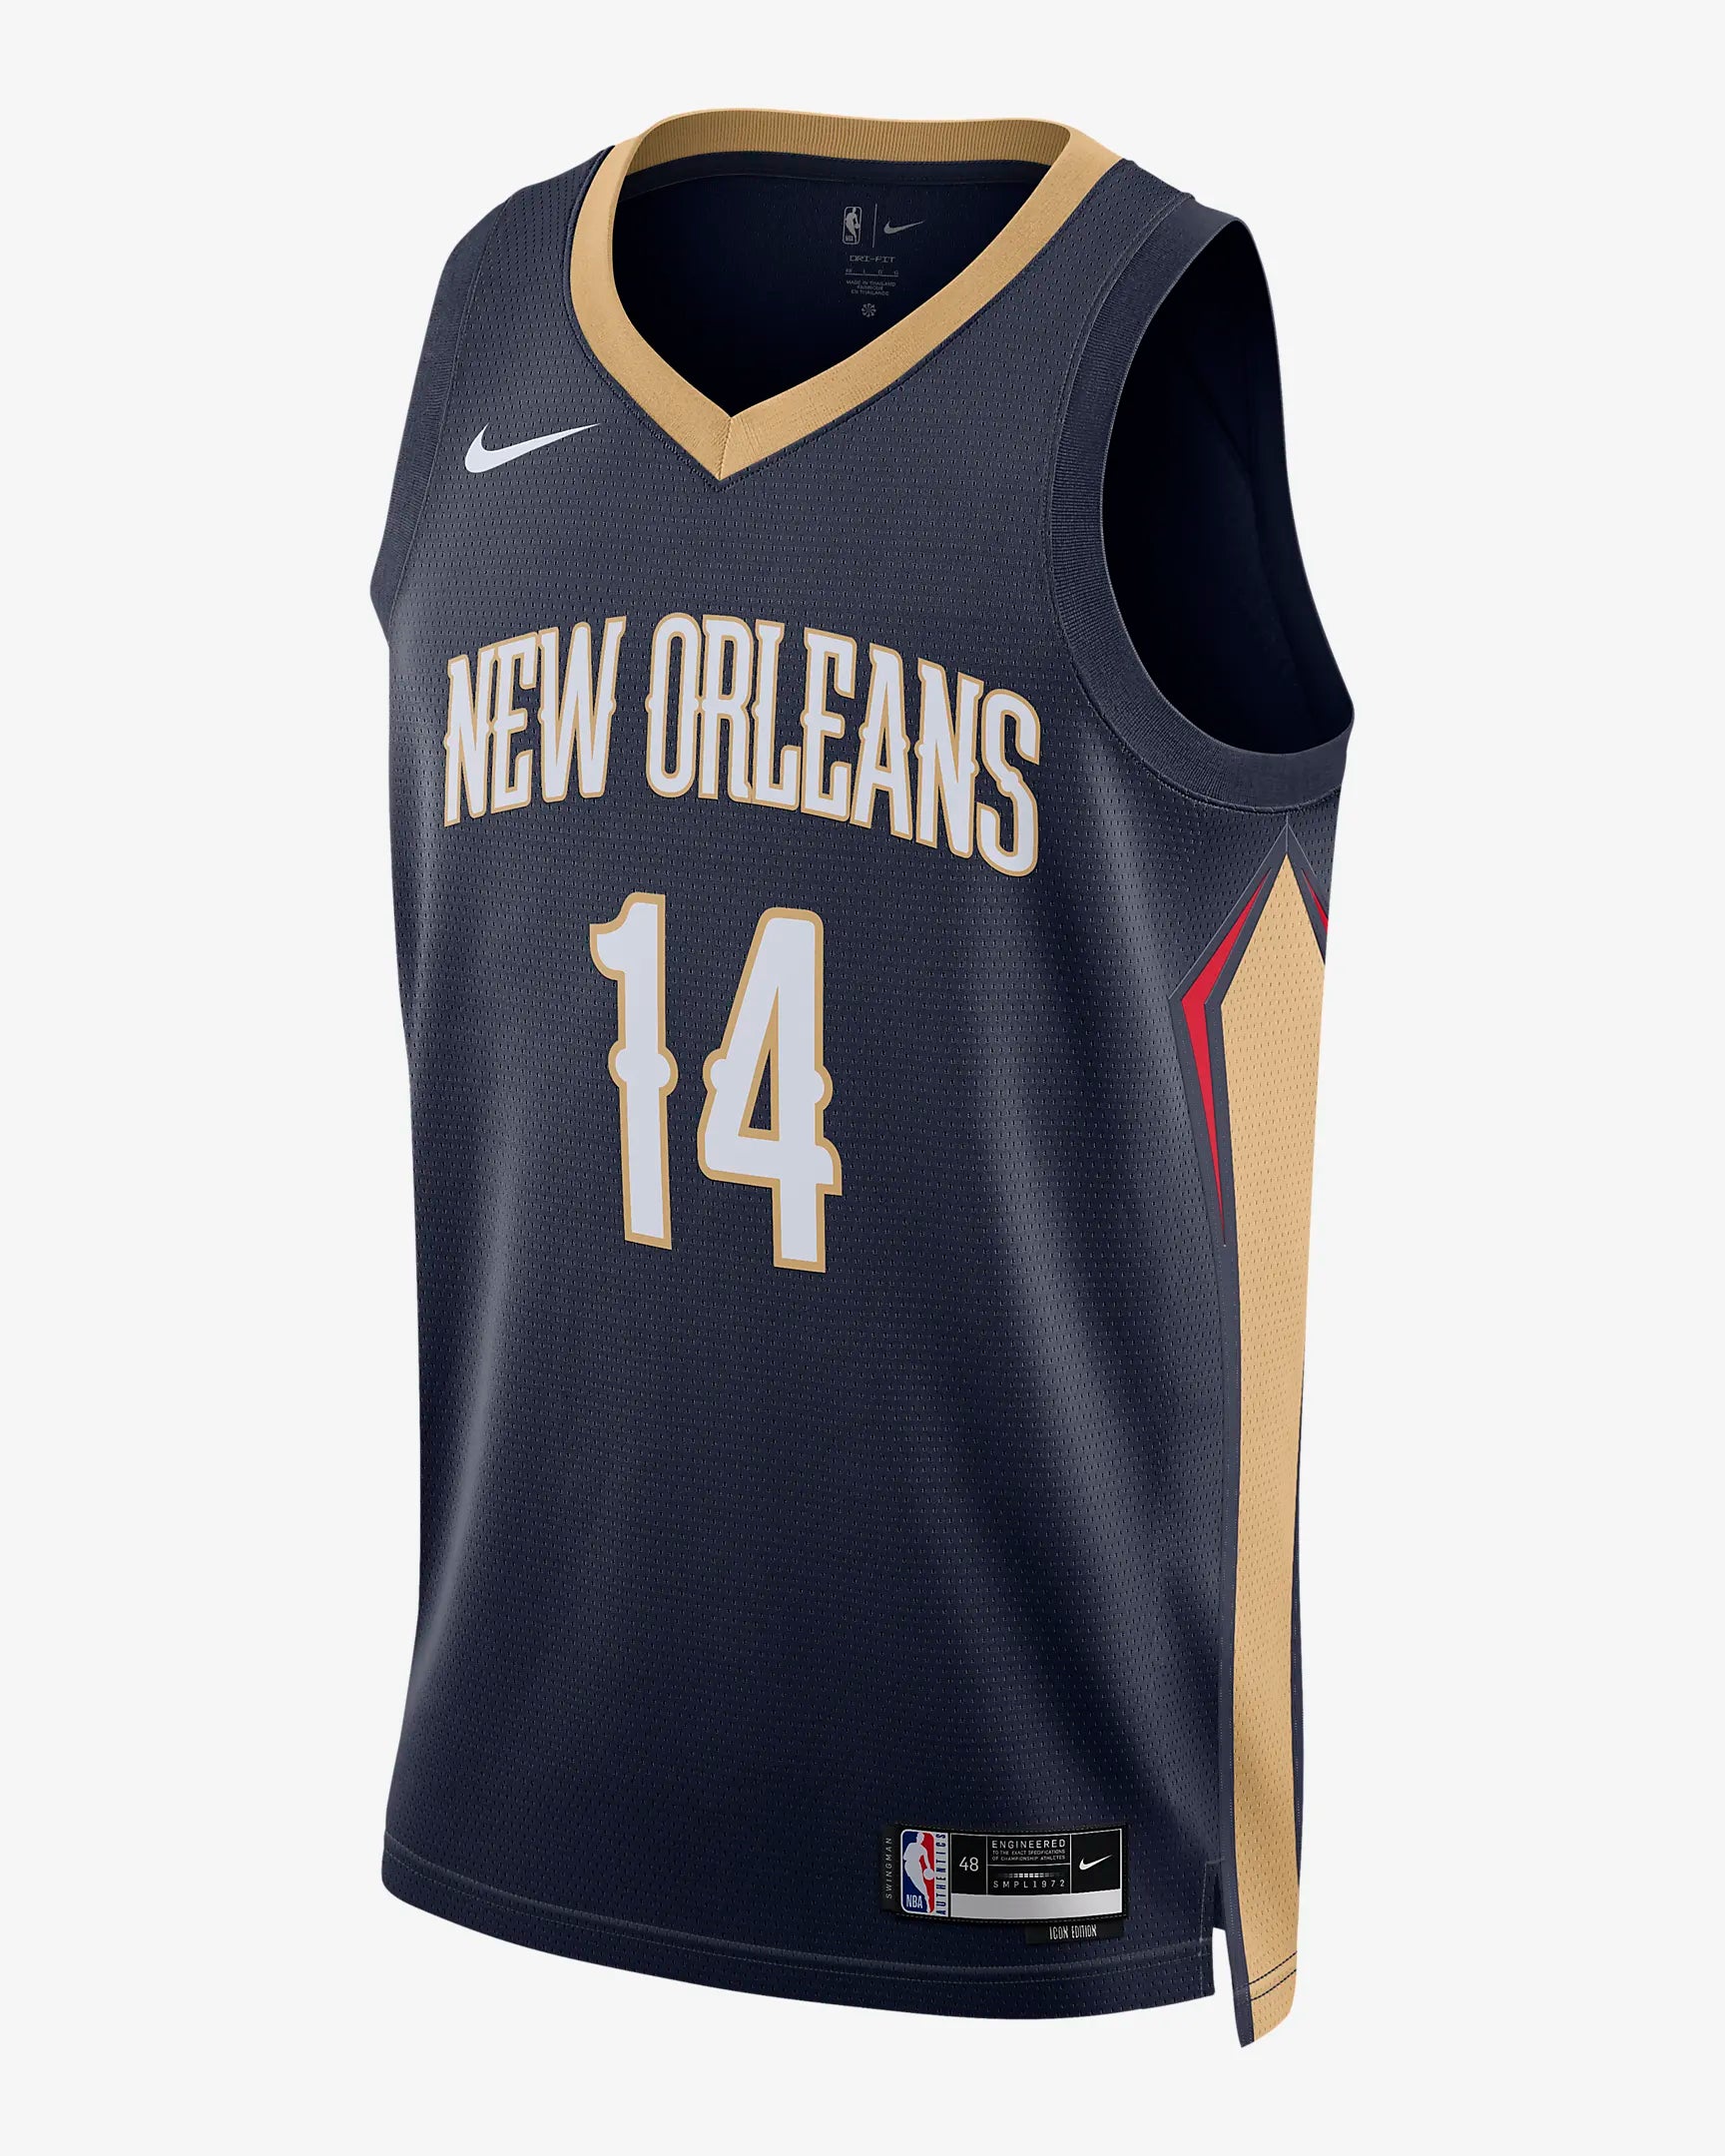 NBA 2K13 New Orleans Pelicans Fictional Jerseys 